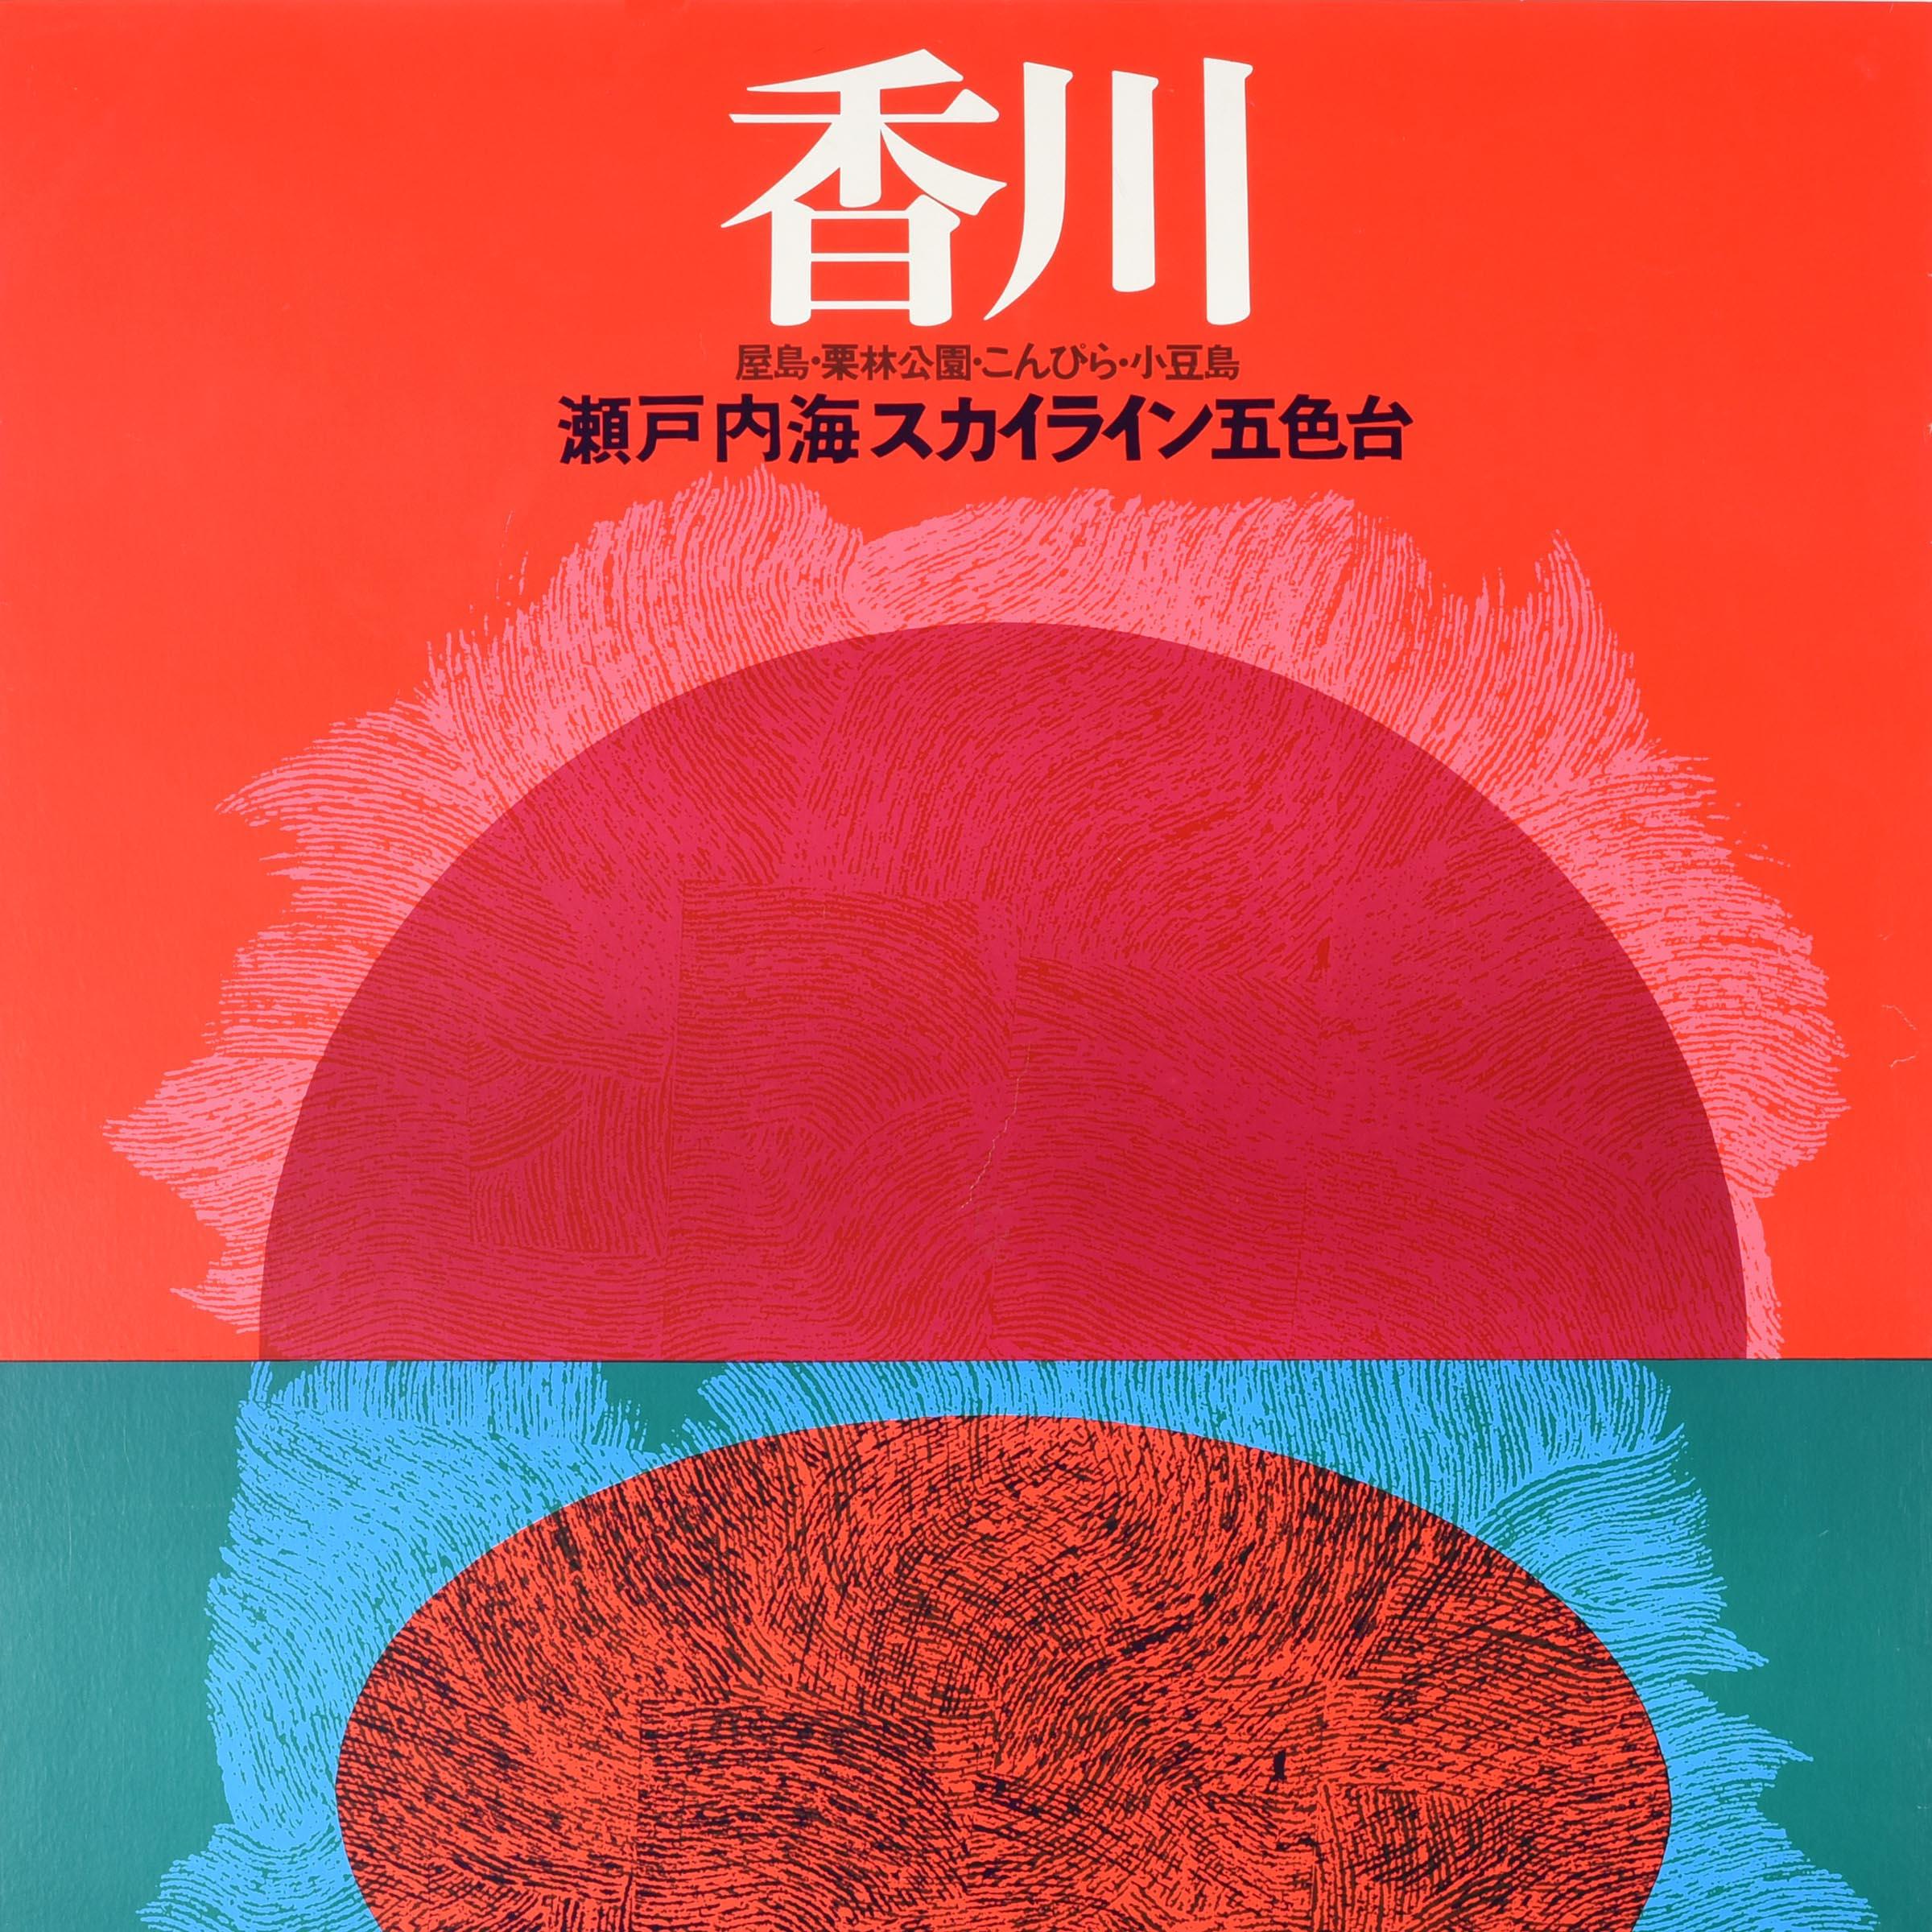 Original-Vintage-Reiseplakat, Eisenbahn, Kagawa Japan, Sonnen- Yashima-Gebirge (Rot), Print, von Unknown